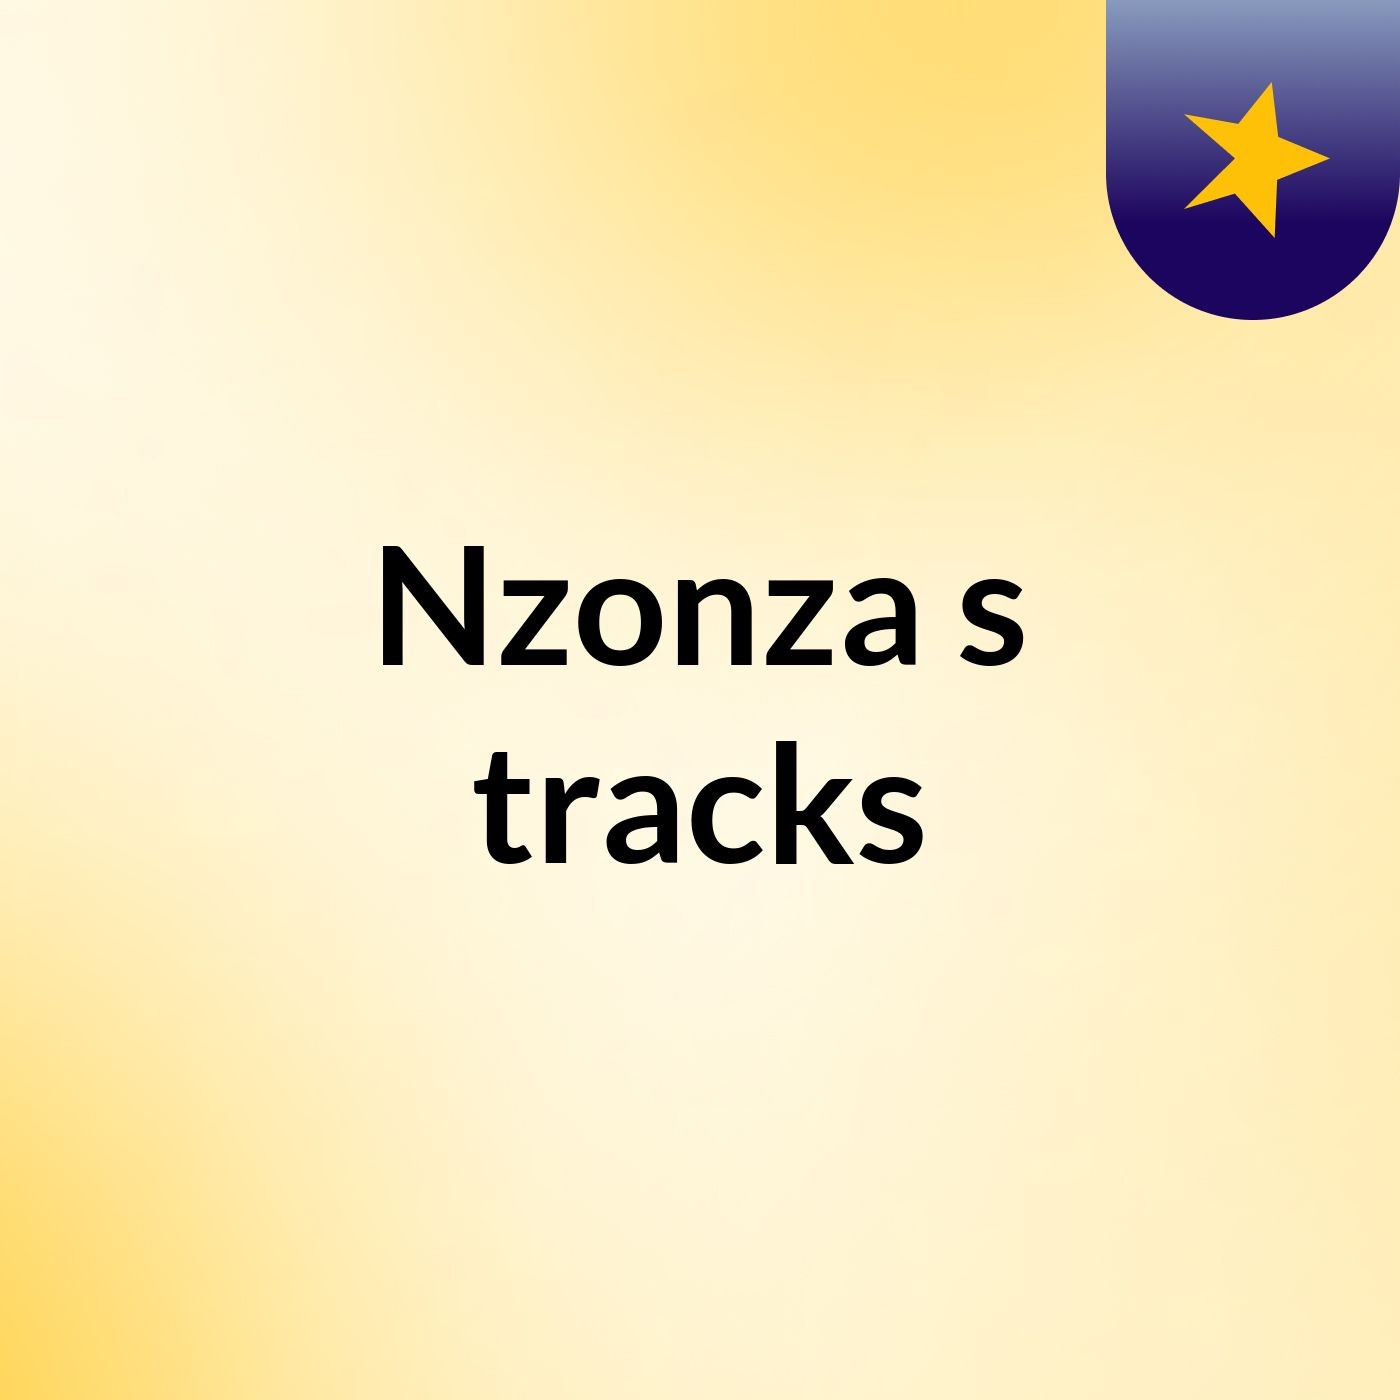 Nzonza's tracks